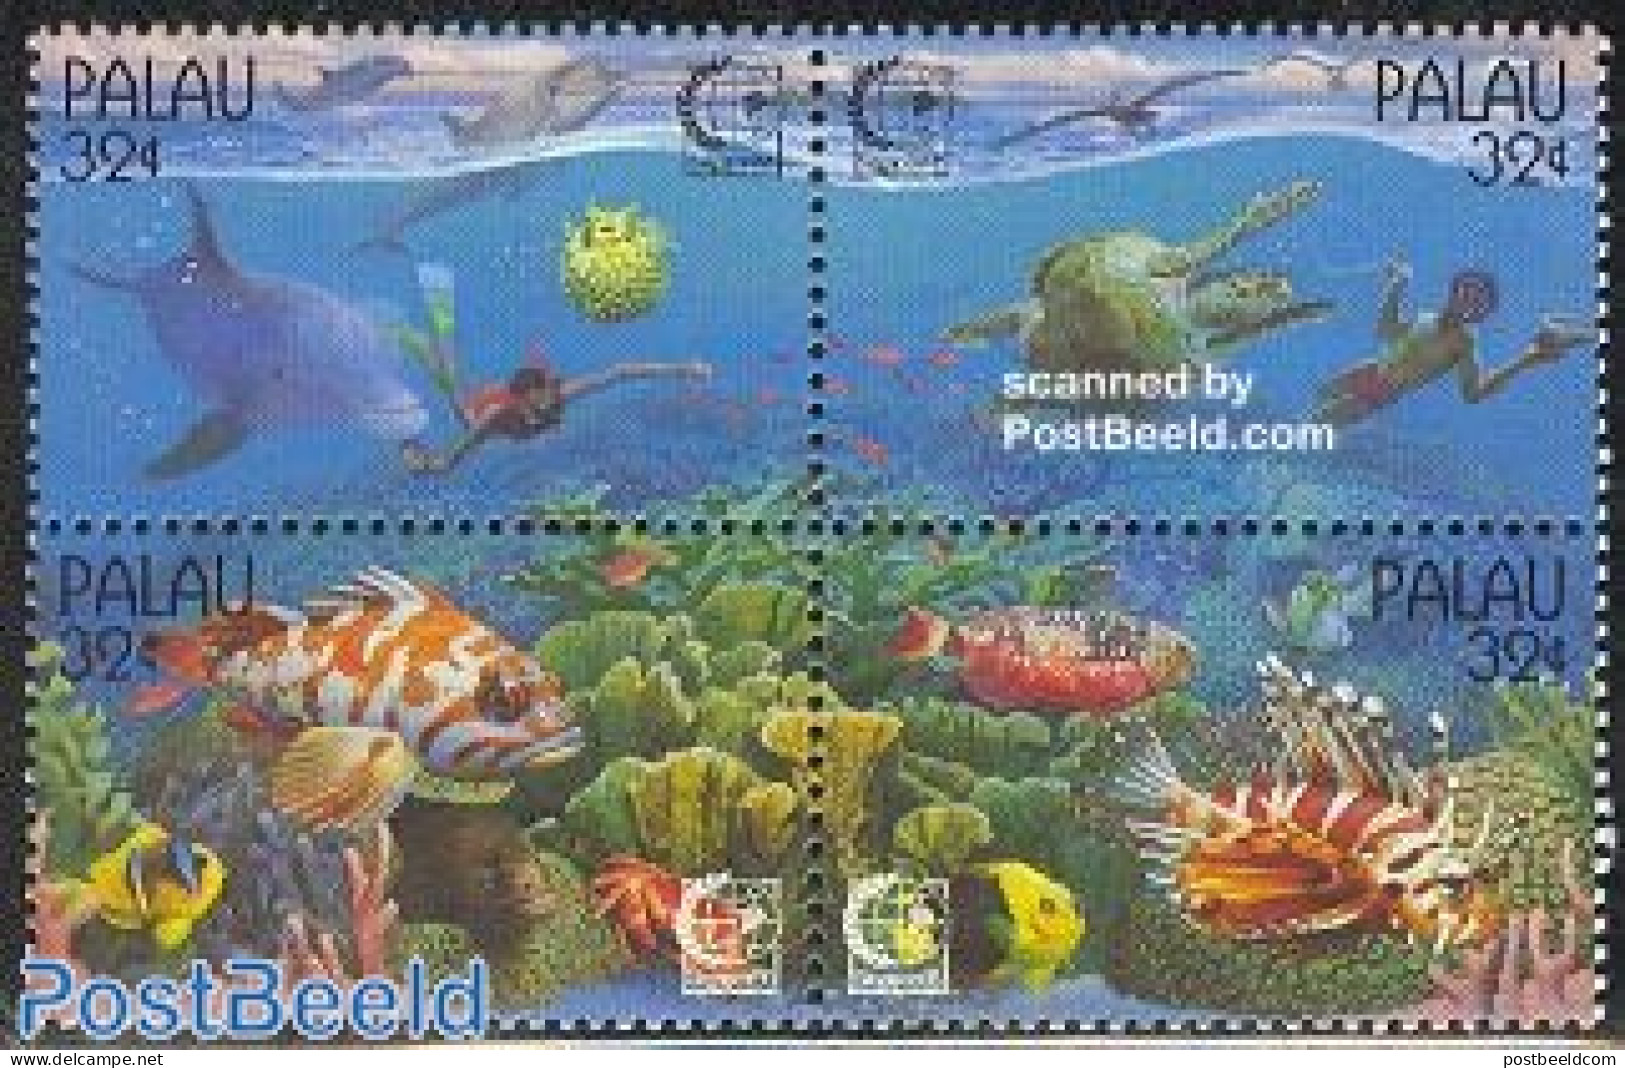 Palau 1995 Singapore 95 4v [+], Mint NH, Nature - Fish - Reptiles - Sea Mammals - Turtles - Fische